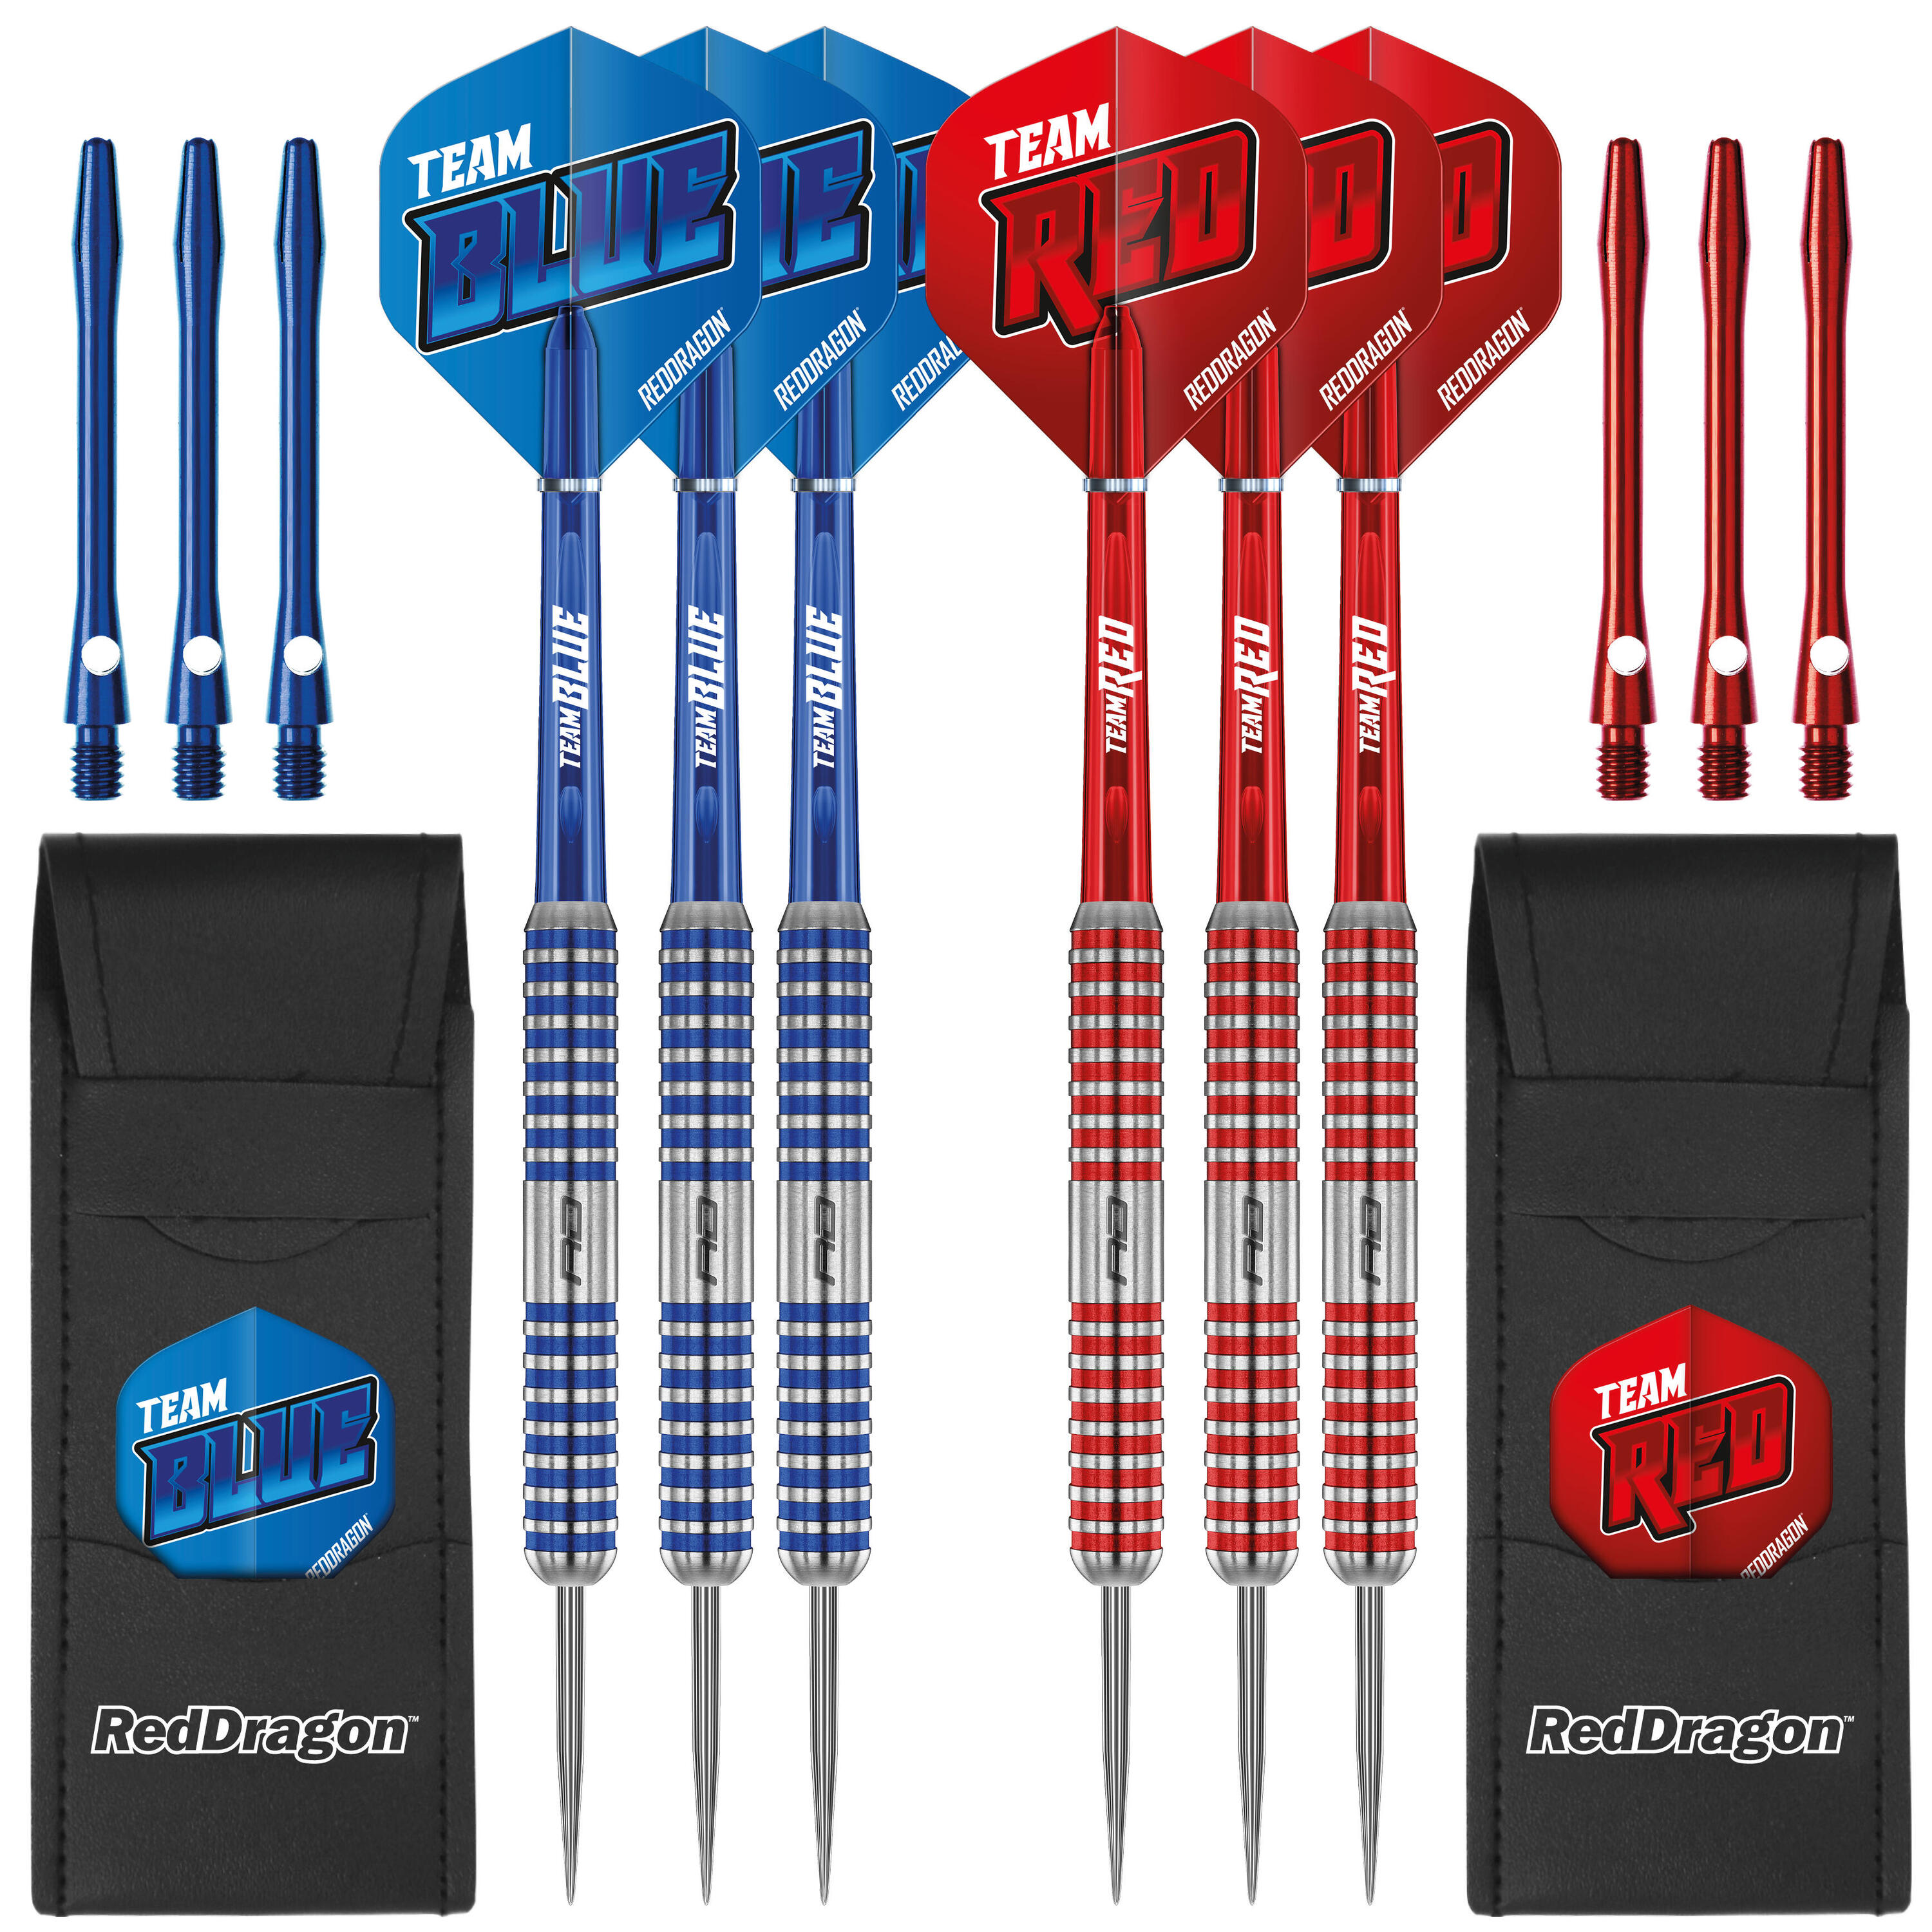 Team Red v Team Blue Tungsten Professional Darts Set with Flights & Shafts 5/6